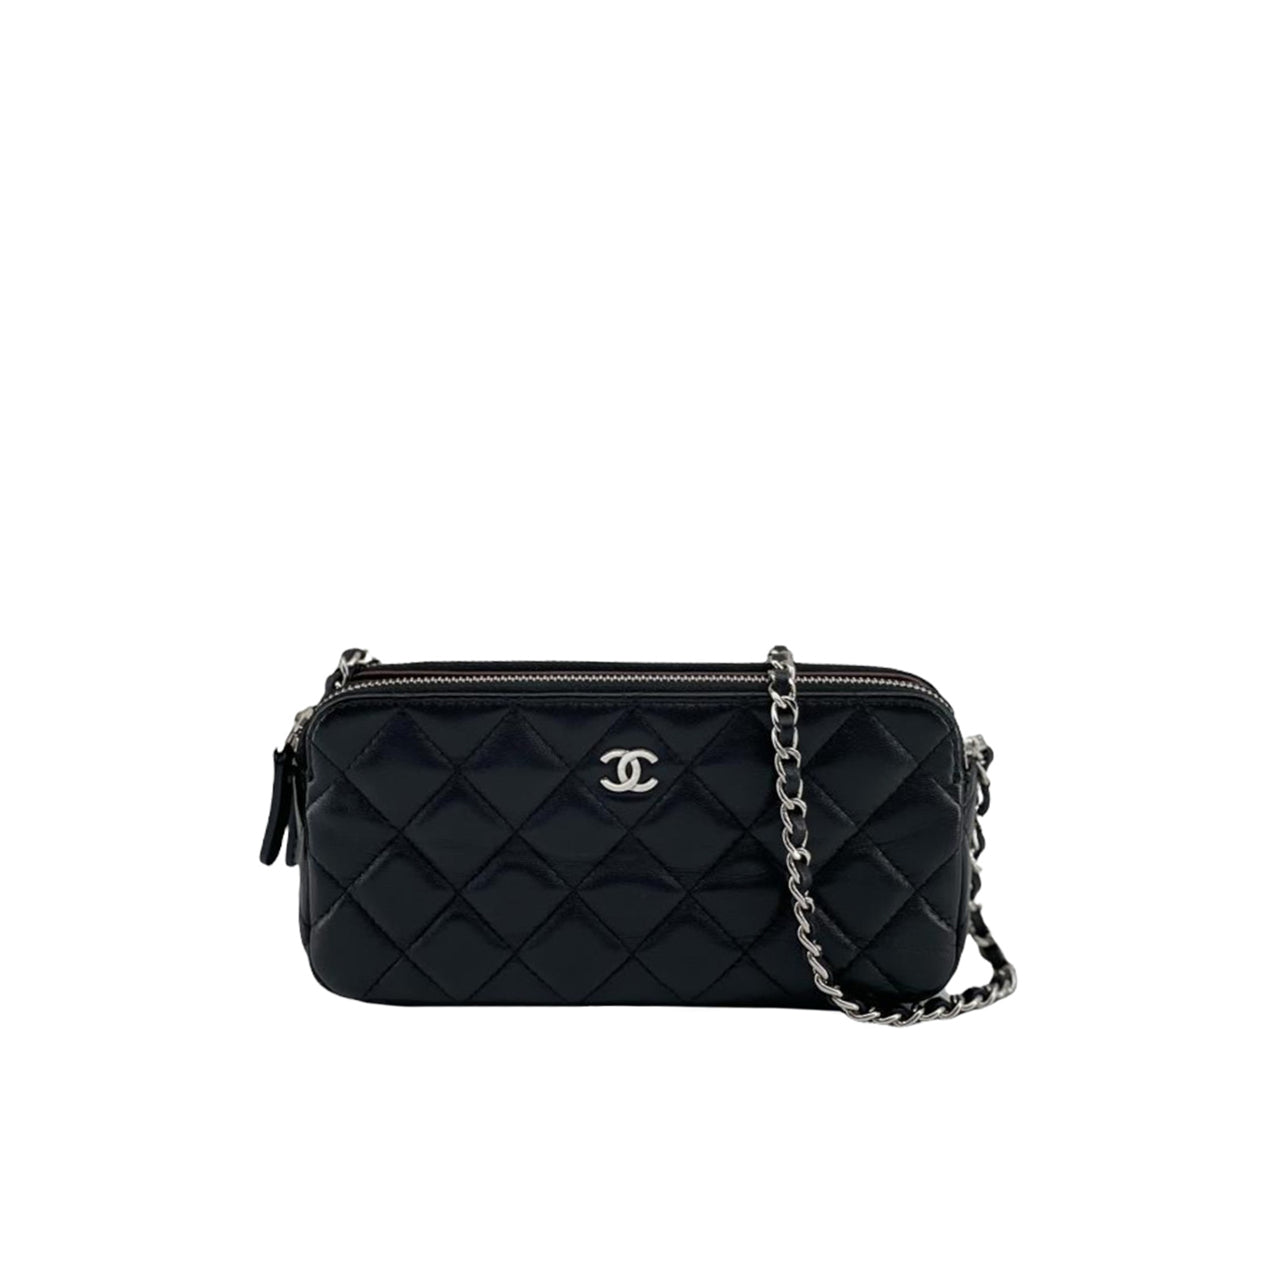 Chanel Dual Zip Quilted Bowling Bag Black Lambskin – ＬＯＶＥＬＯＴＳＬＵＸＵＲＹ